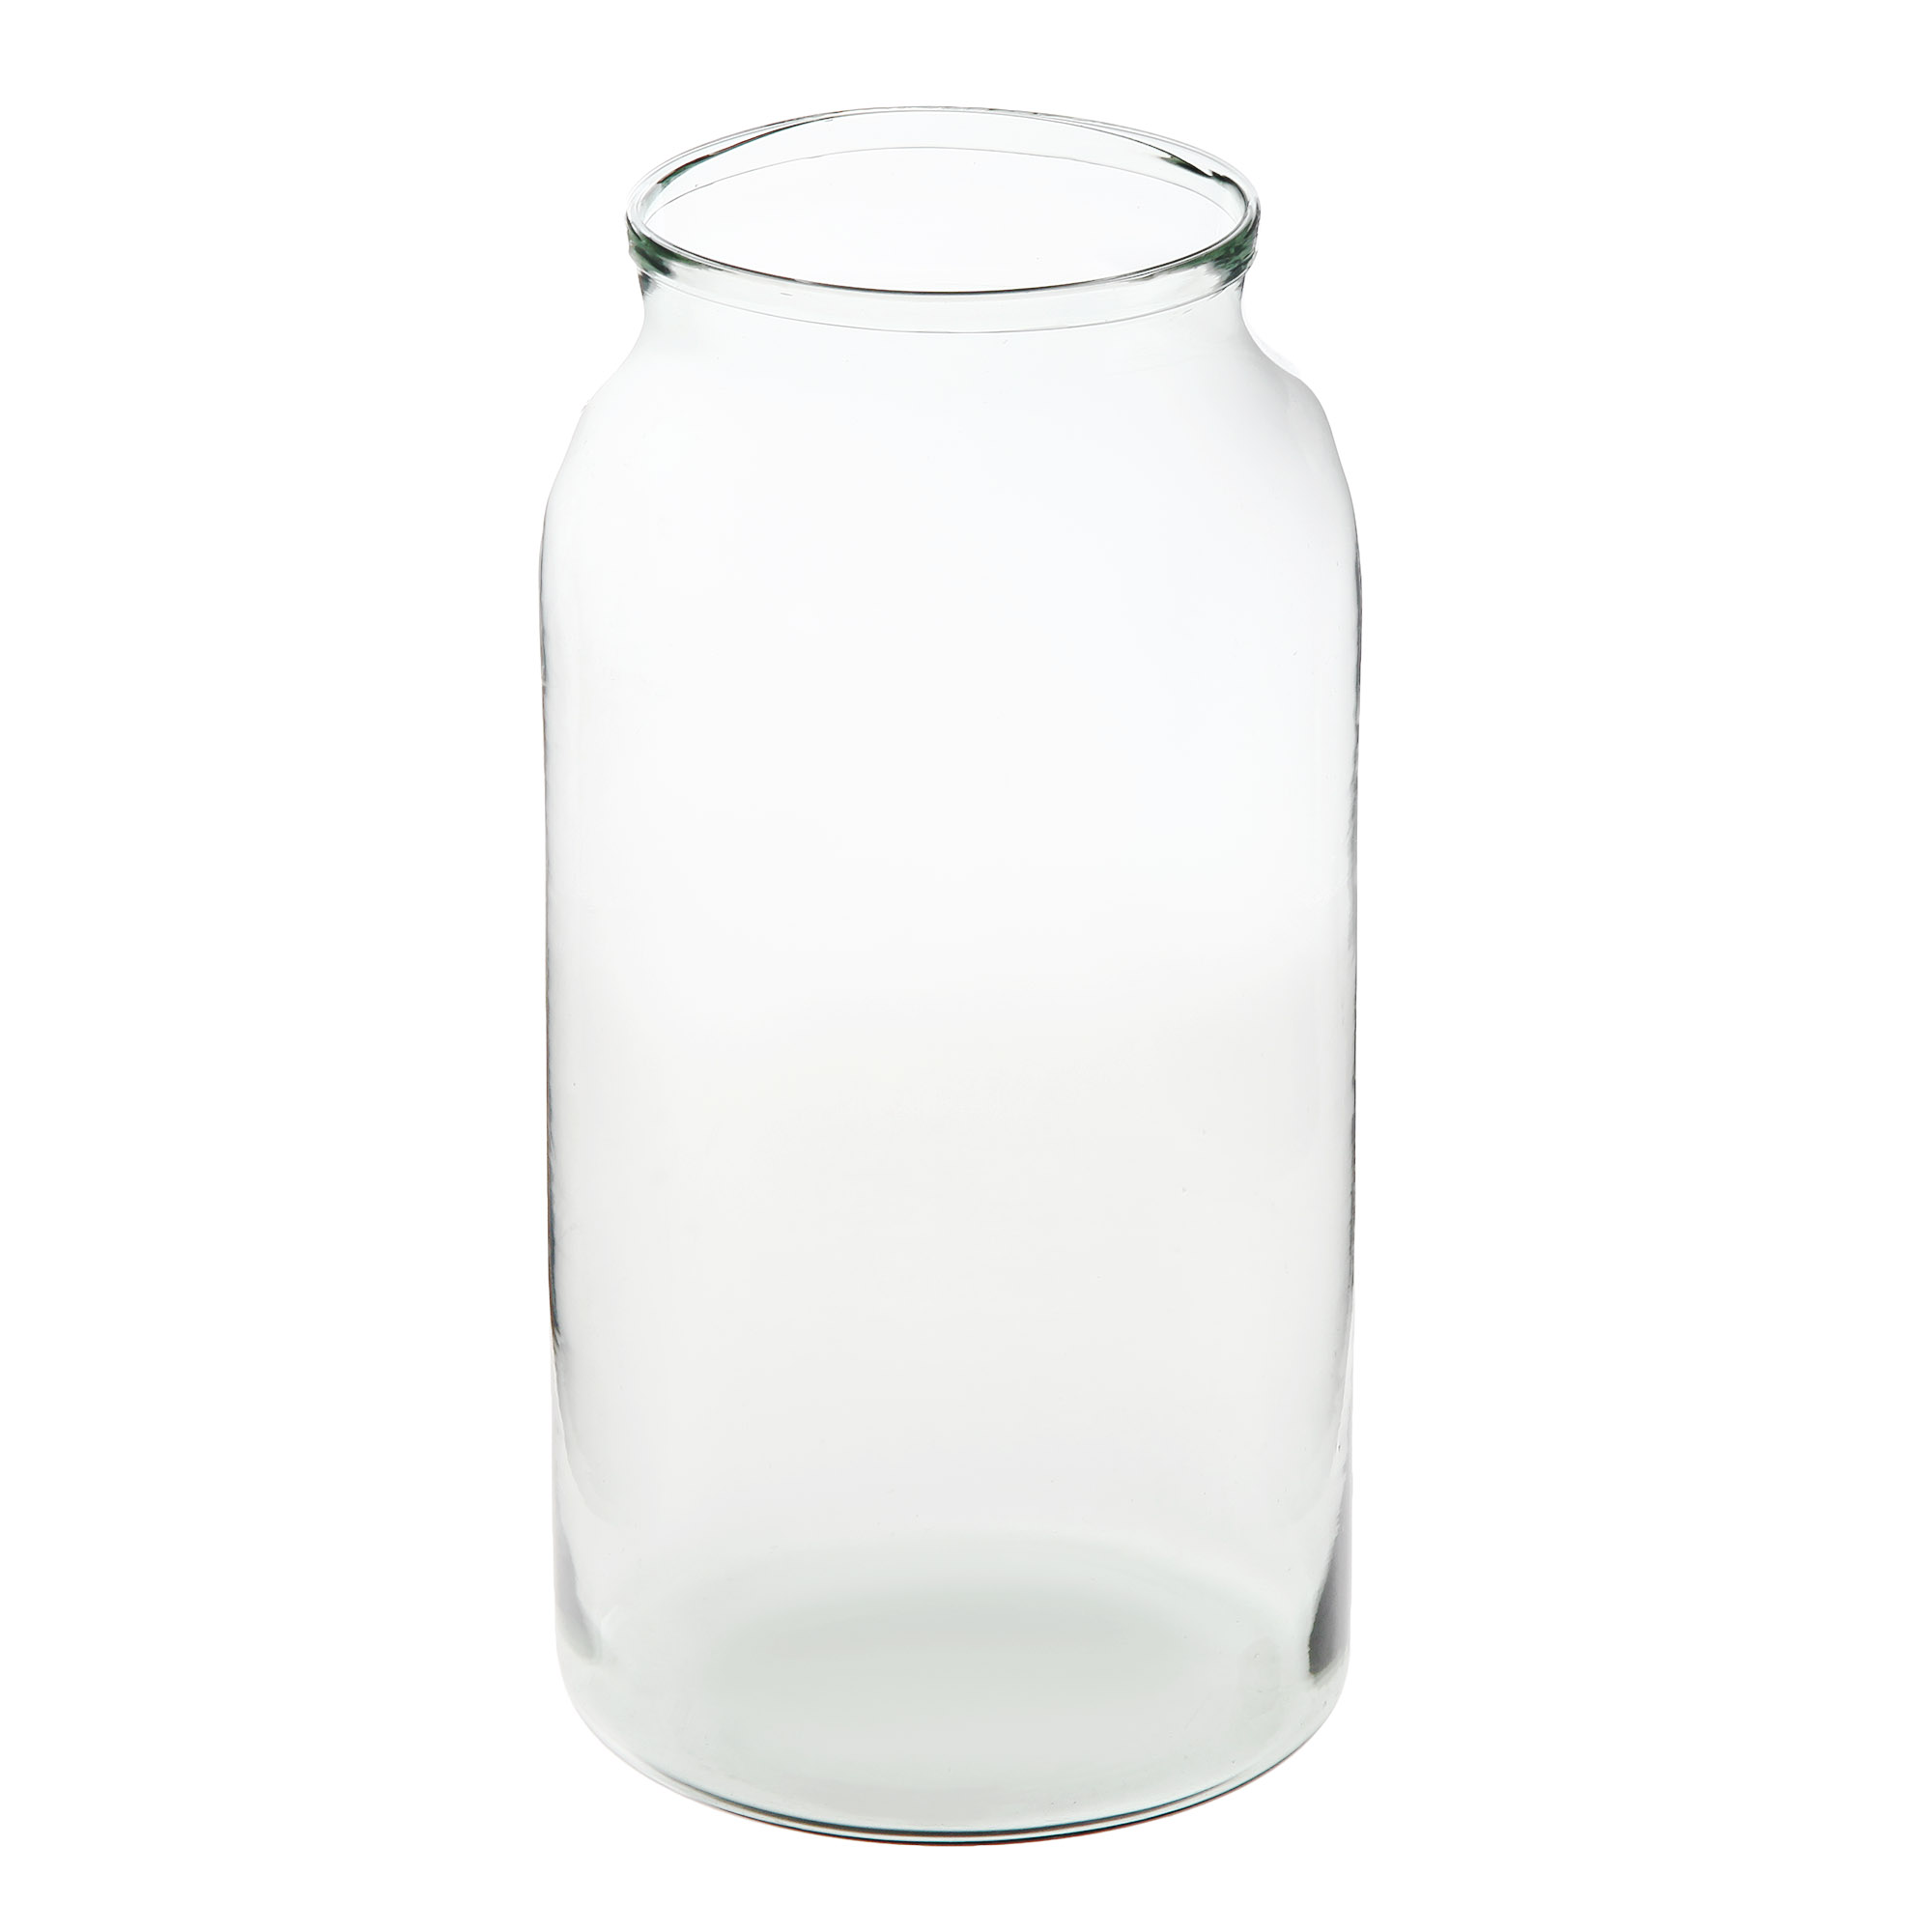 Ваза Hakbijl glass oval 40 см